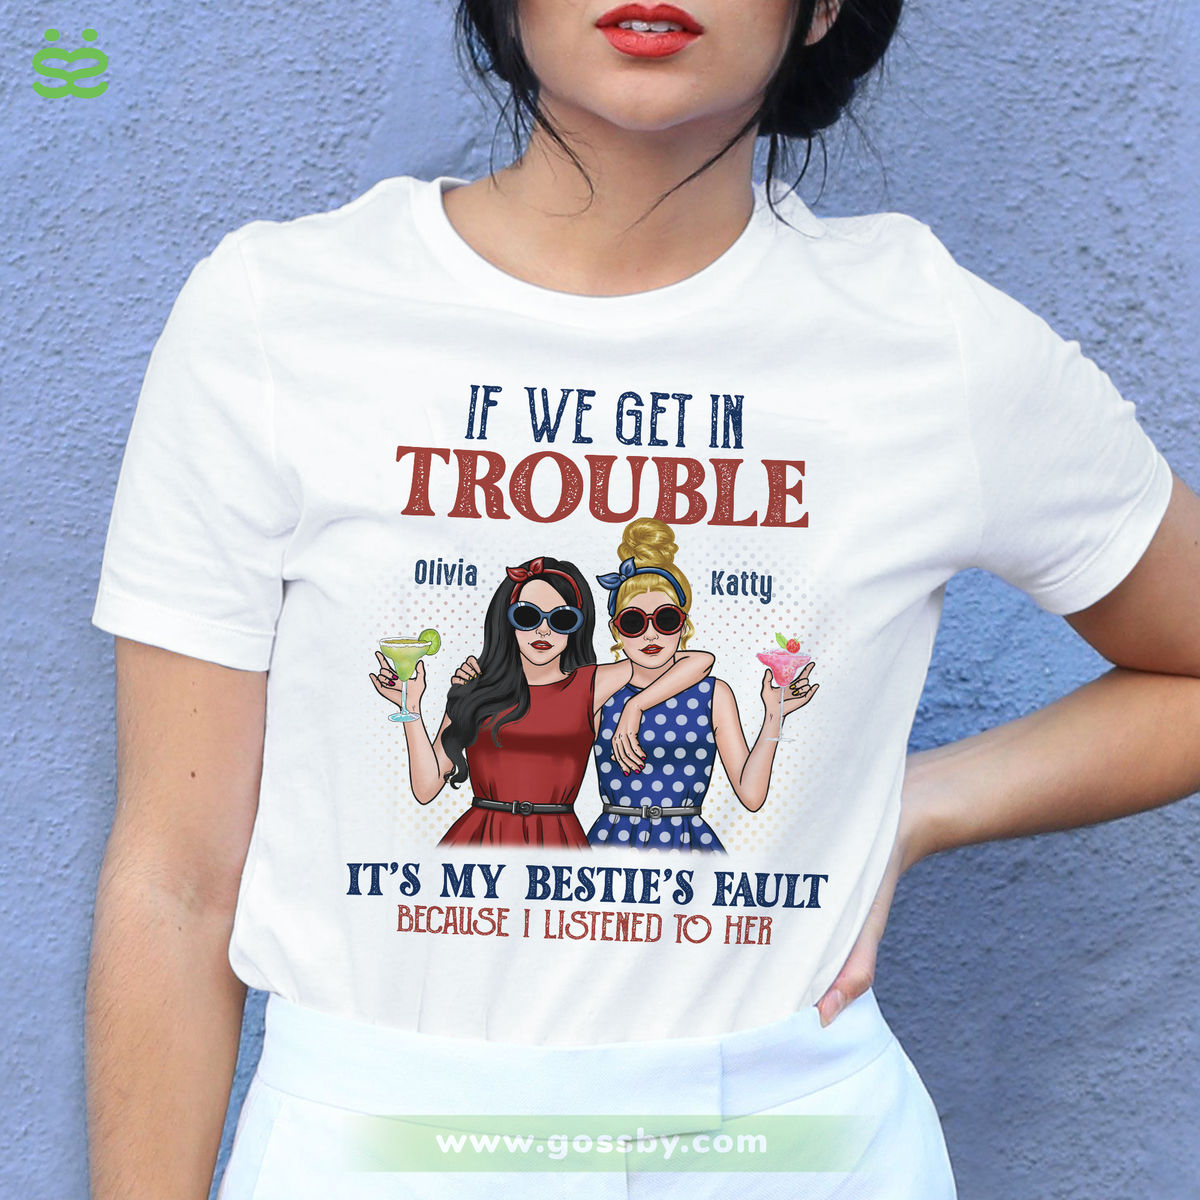 Personalized Shirt - Trouble Besties - If We Get in Trouble, It's My Bestie's Fault_1